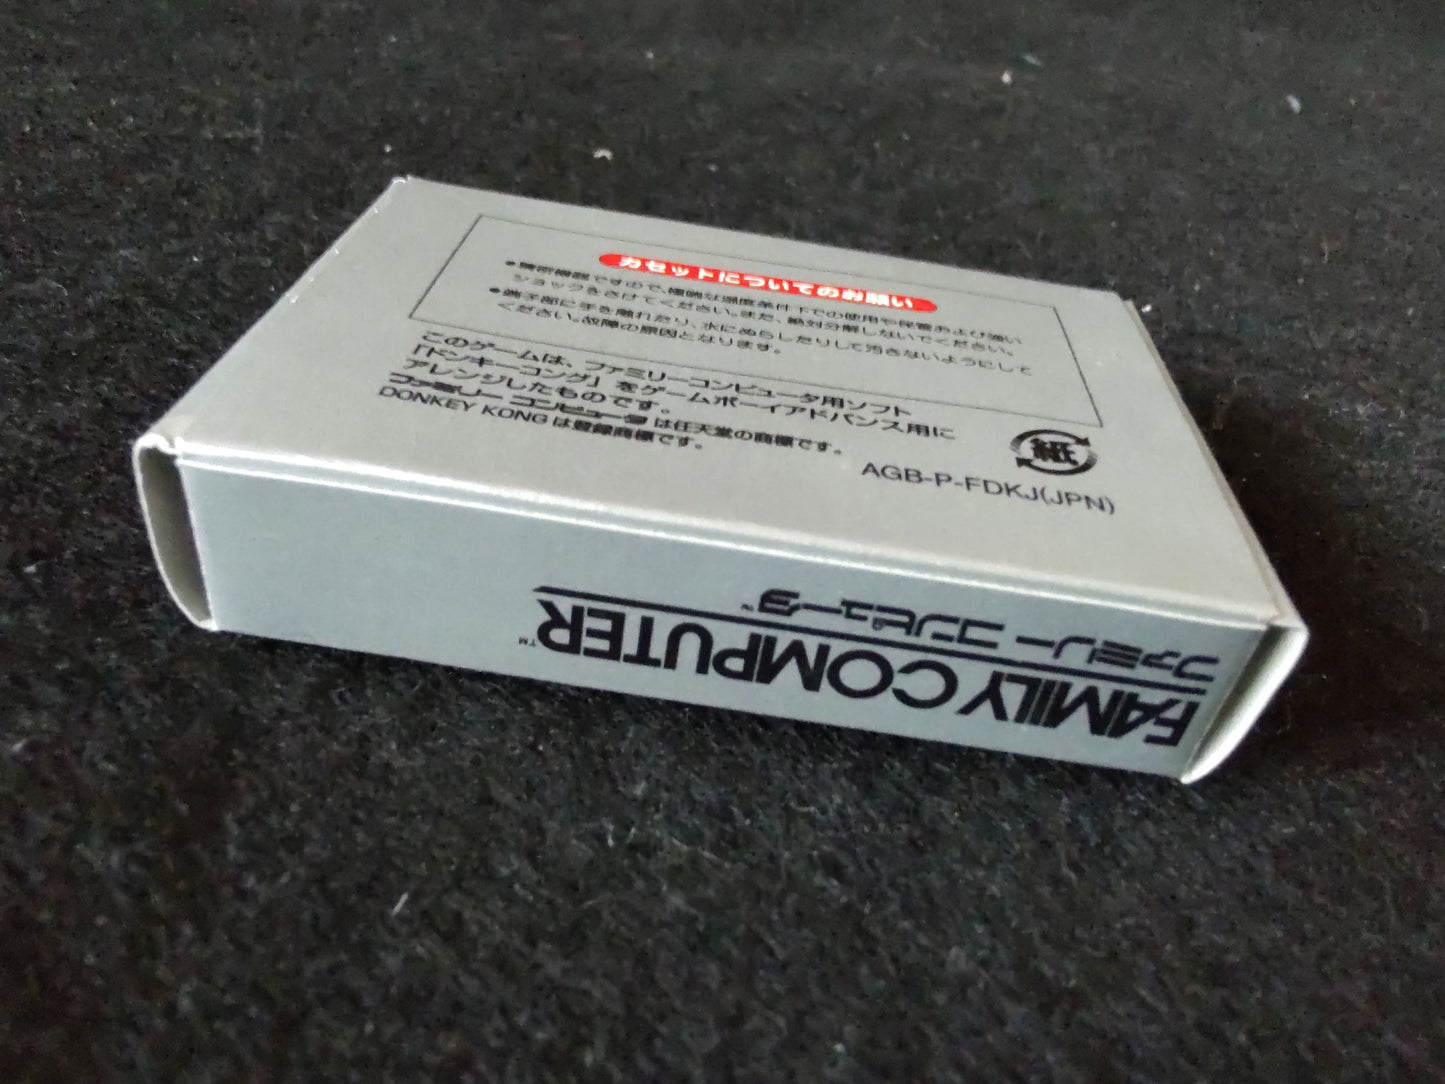 STAR SOLDIER, Donkey Kong, PAC MAN Famicom Mini Ver. Gameboy Advance GBA-f0826-